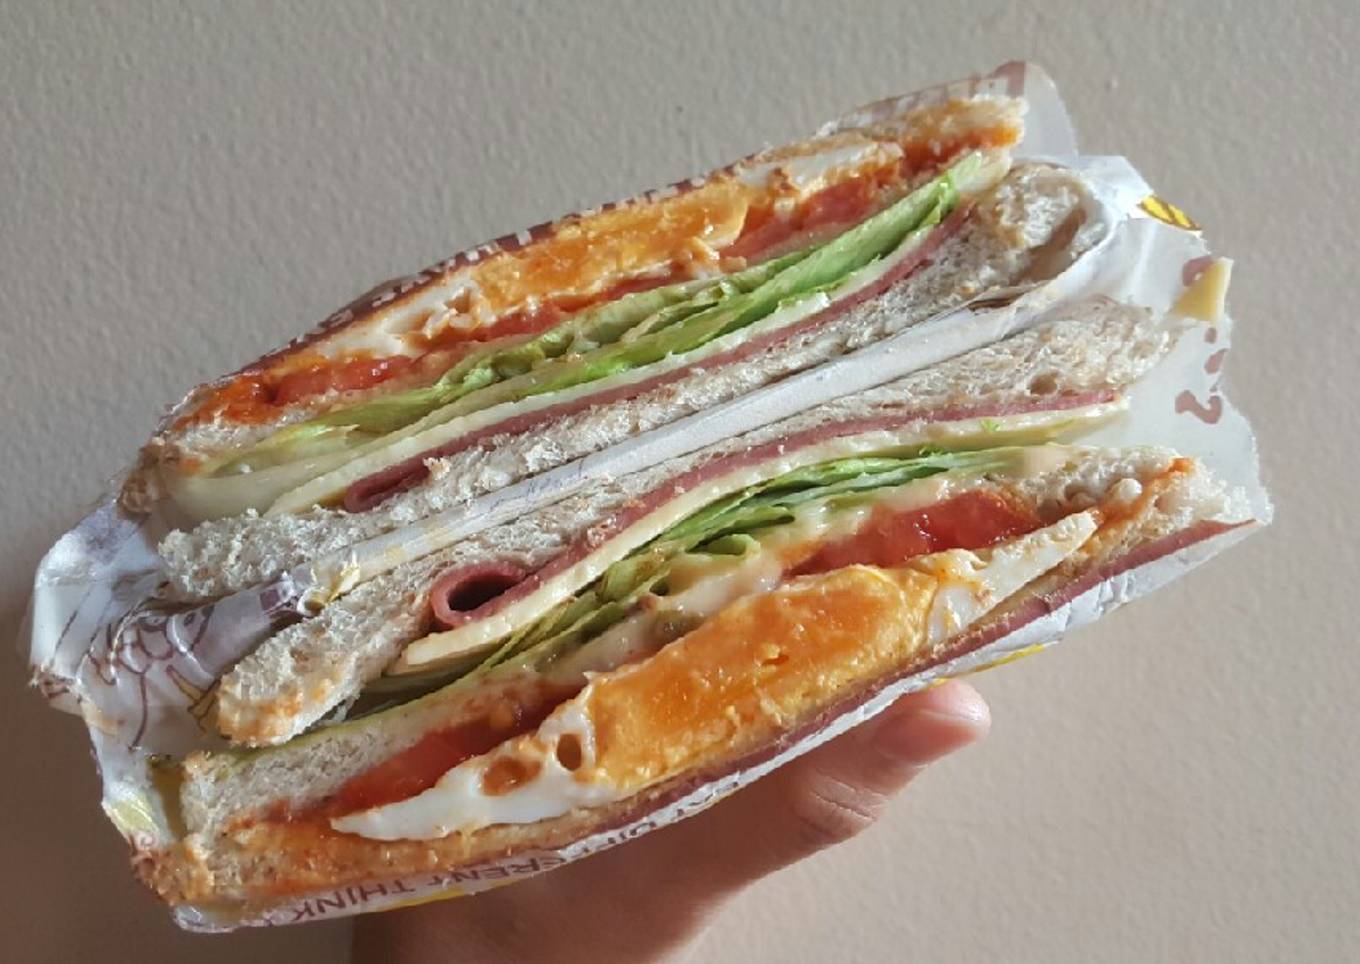 34. Sandwich